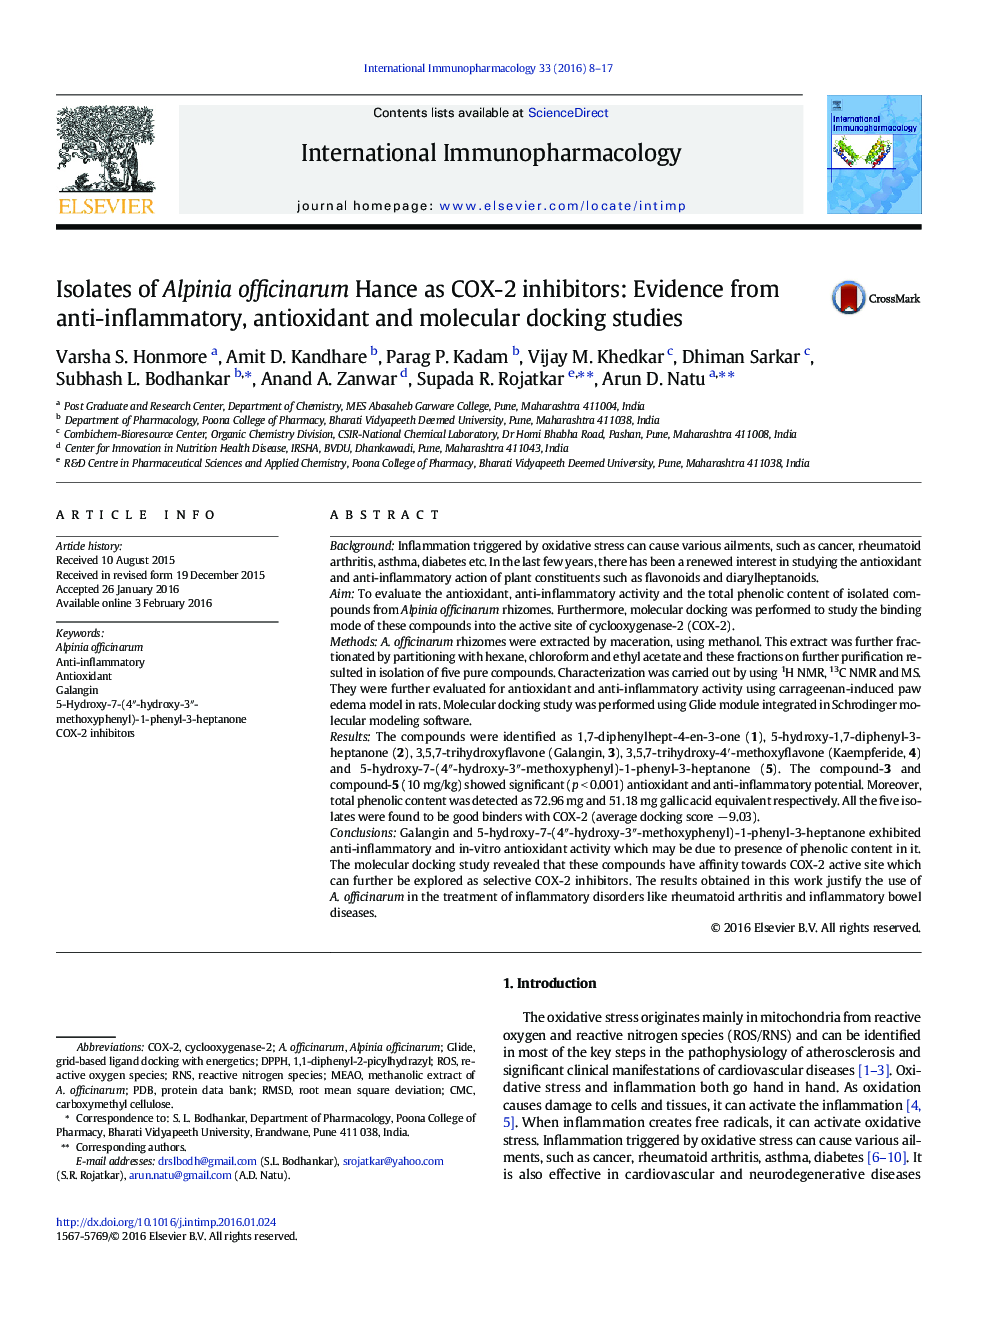 Isolates of Alpinia officinarum Hance as COX-2 inhibitors: Evidence from anti-inflammatory, antioxidant and molecular docking studies